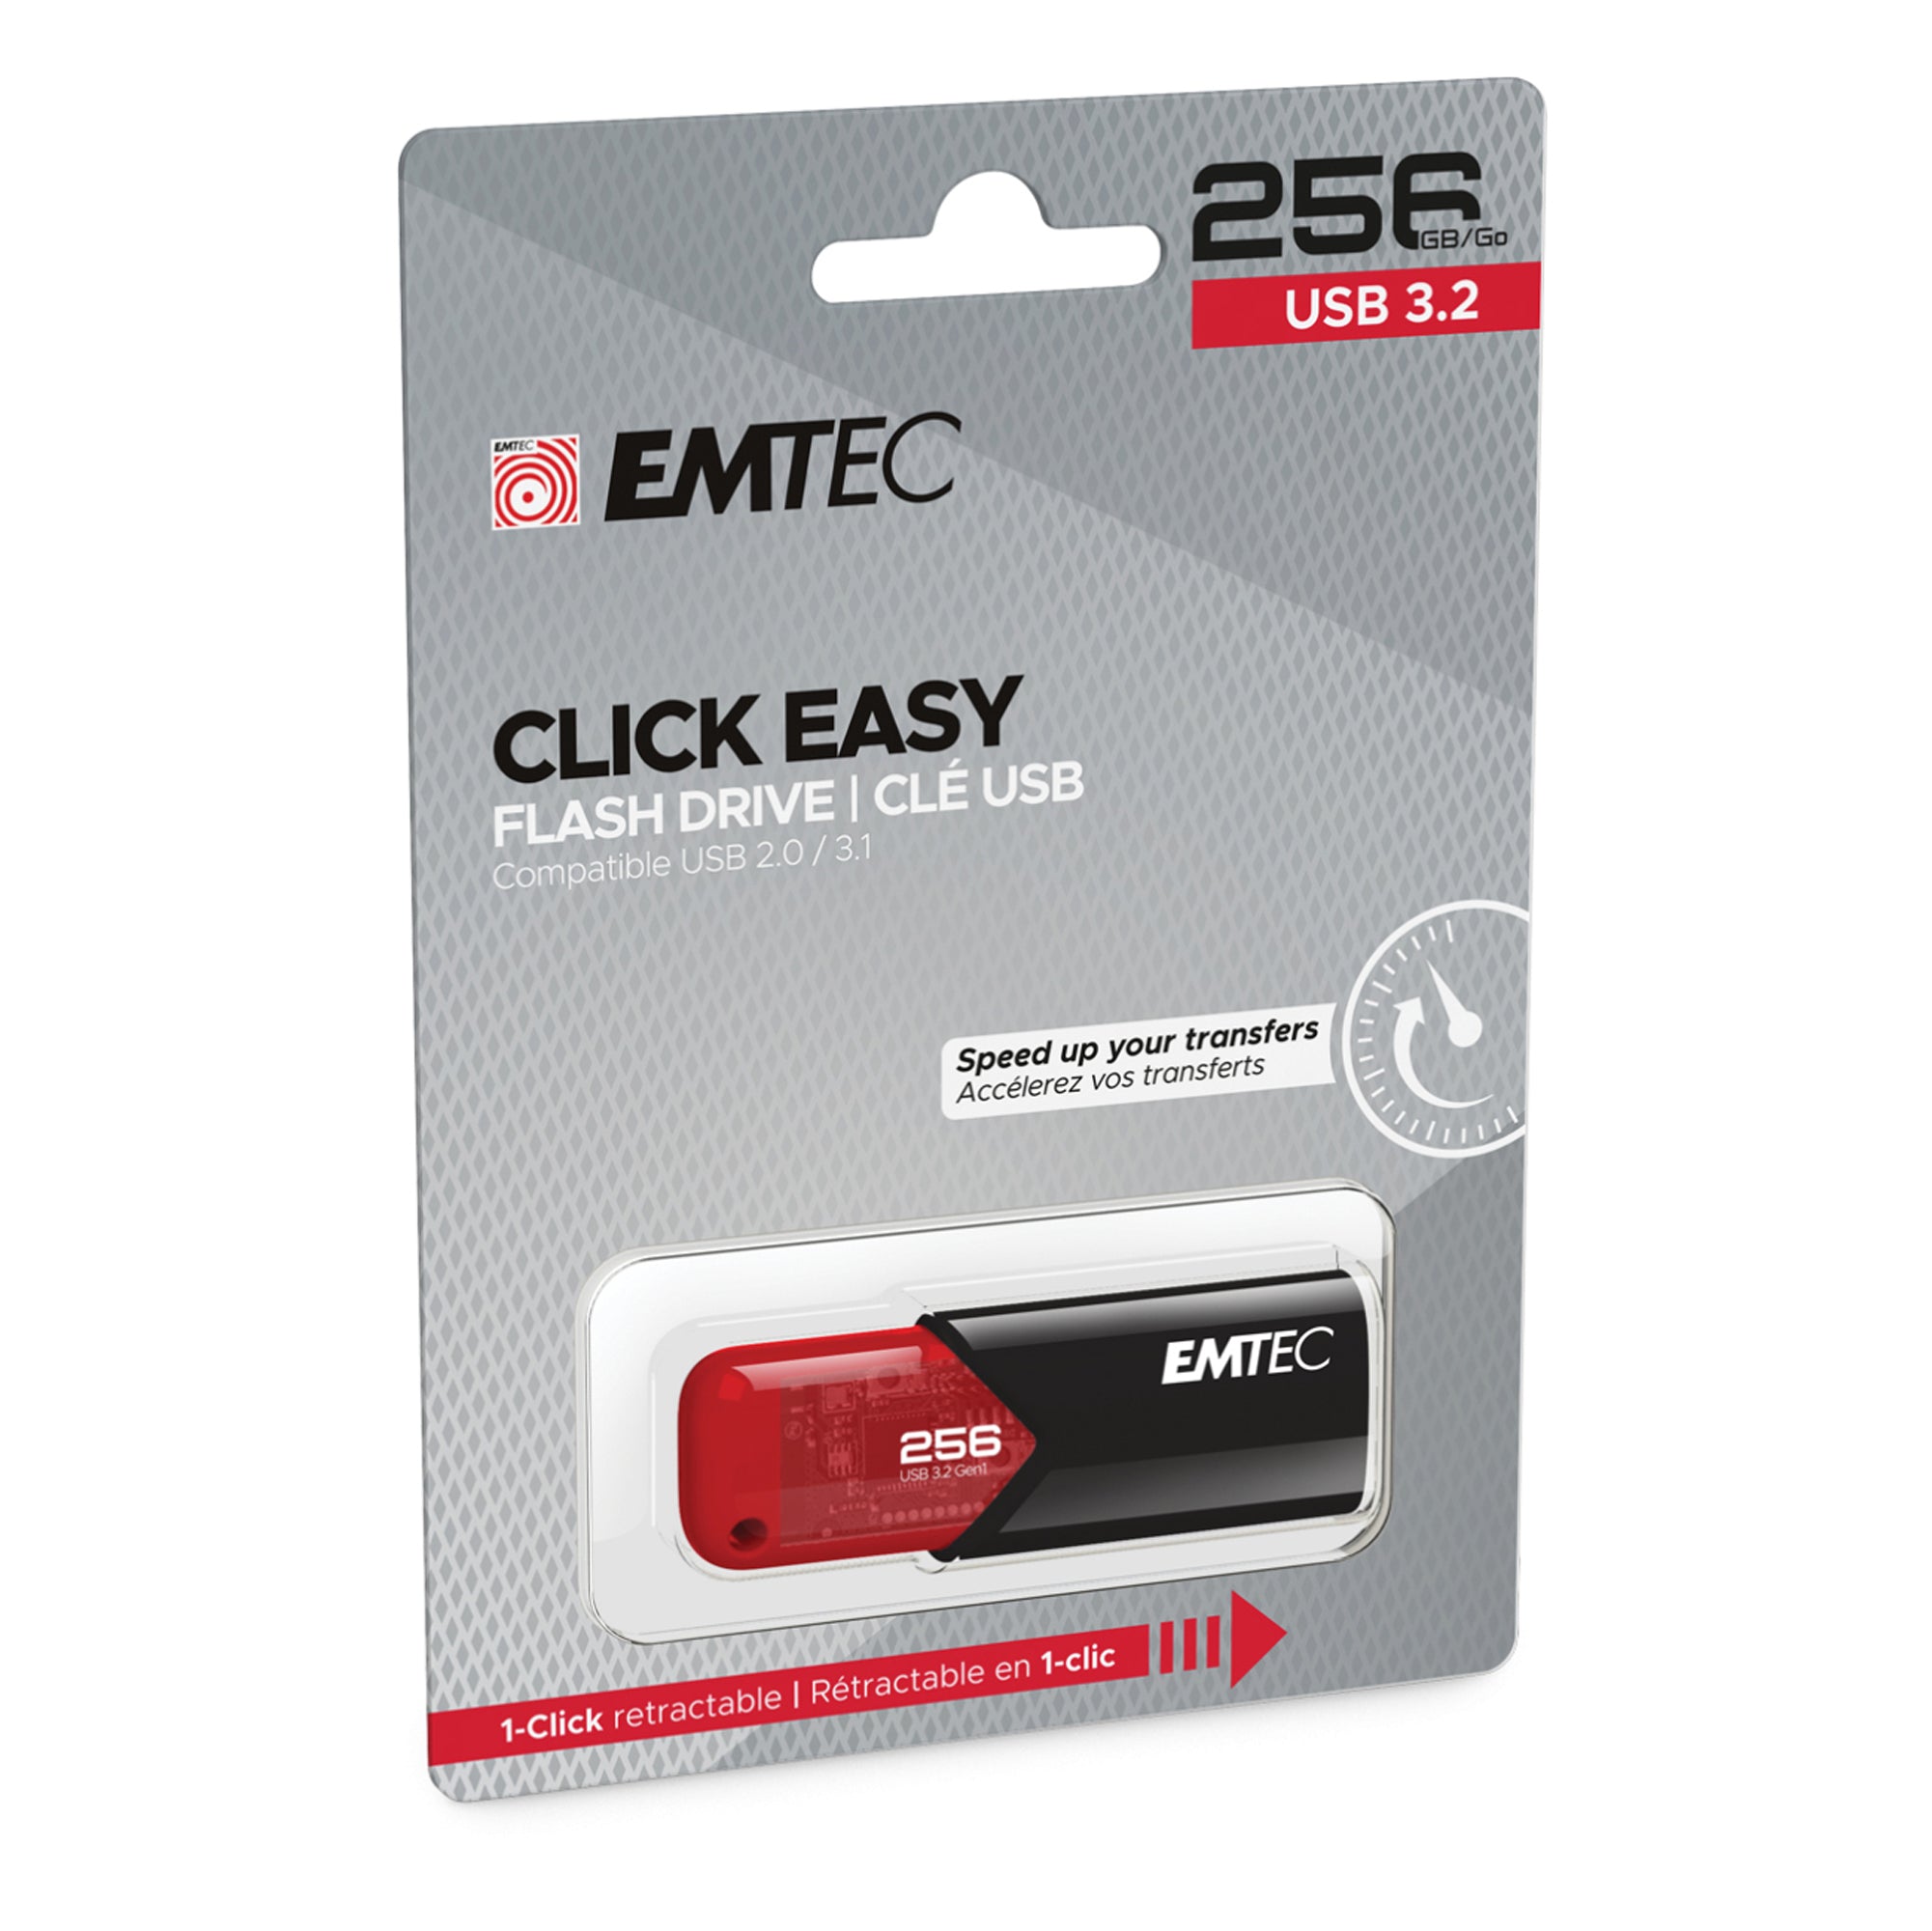 emtec-memoria-usb-b110-usb3-2-clickeasy-256gb-rossa